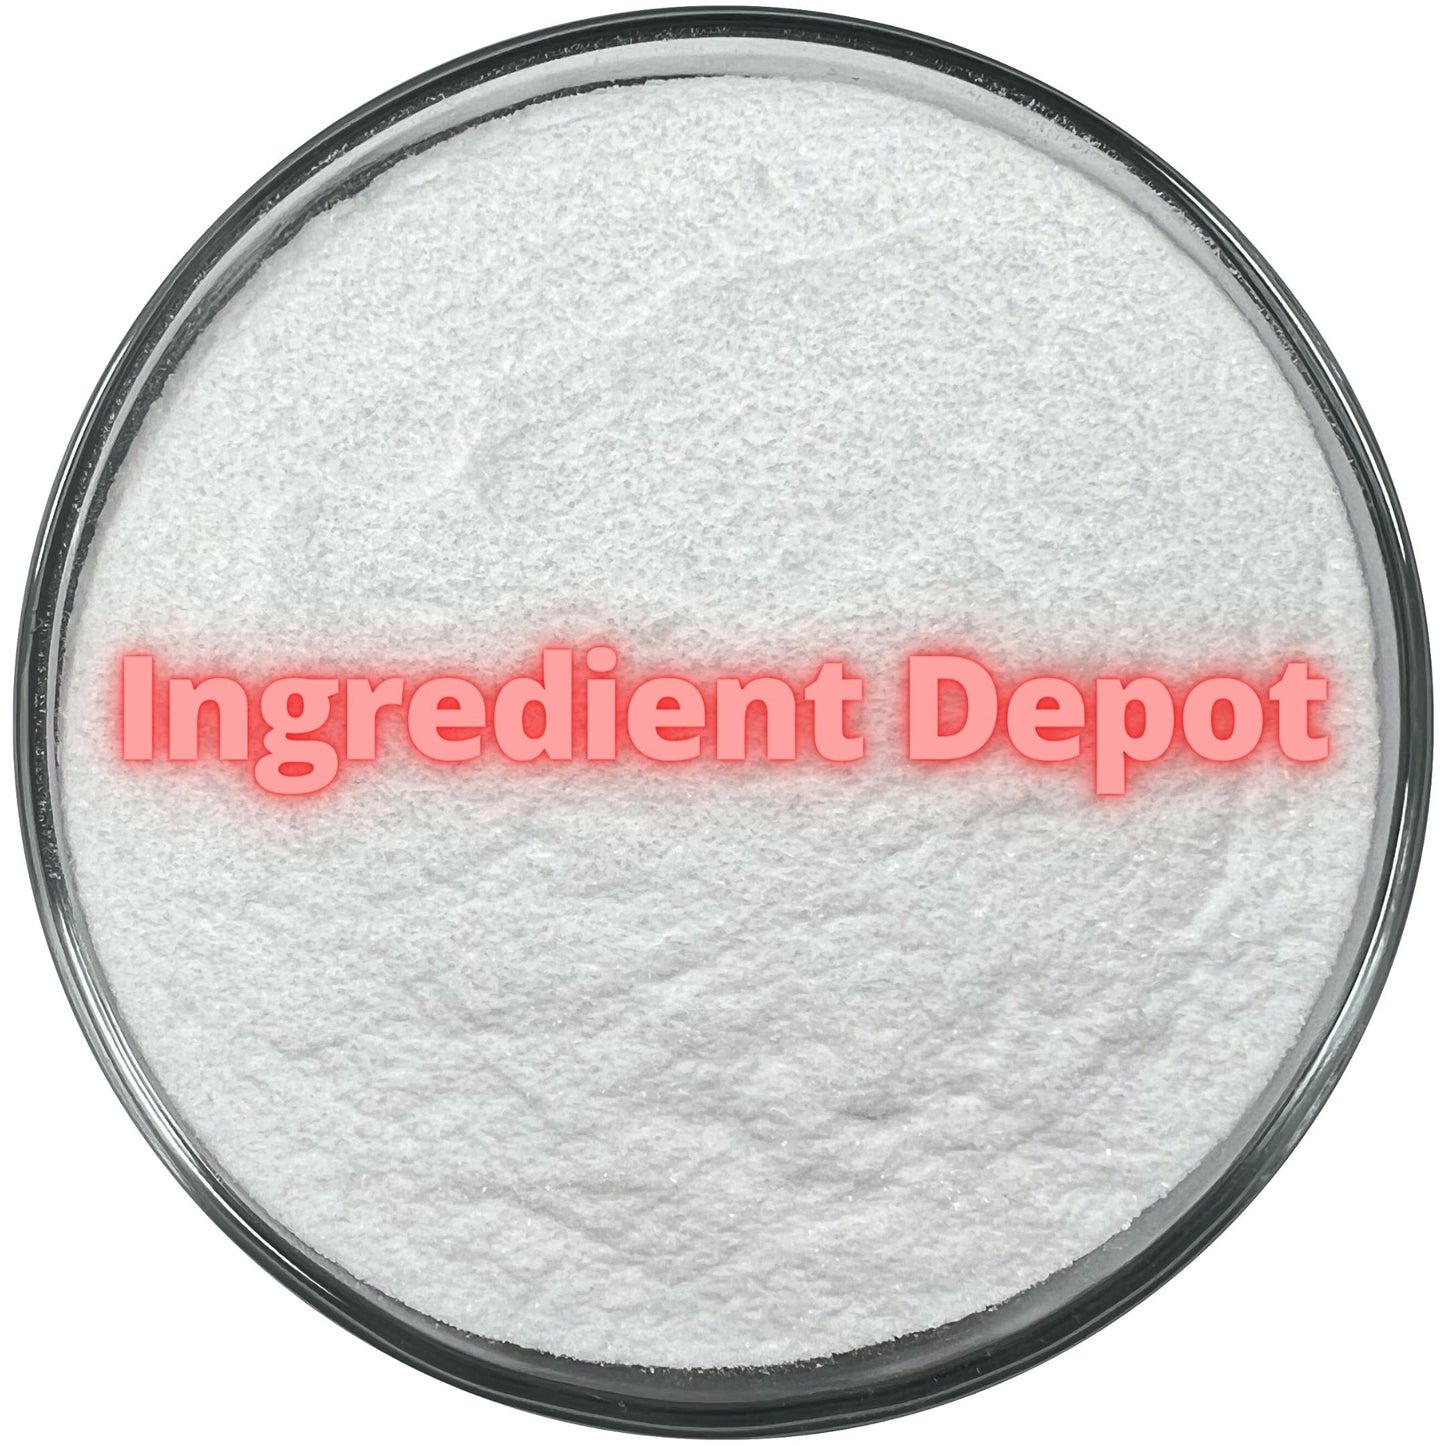 Dextrose Monohydrate, Food Grade 7 kgs - IngredientDepot.com